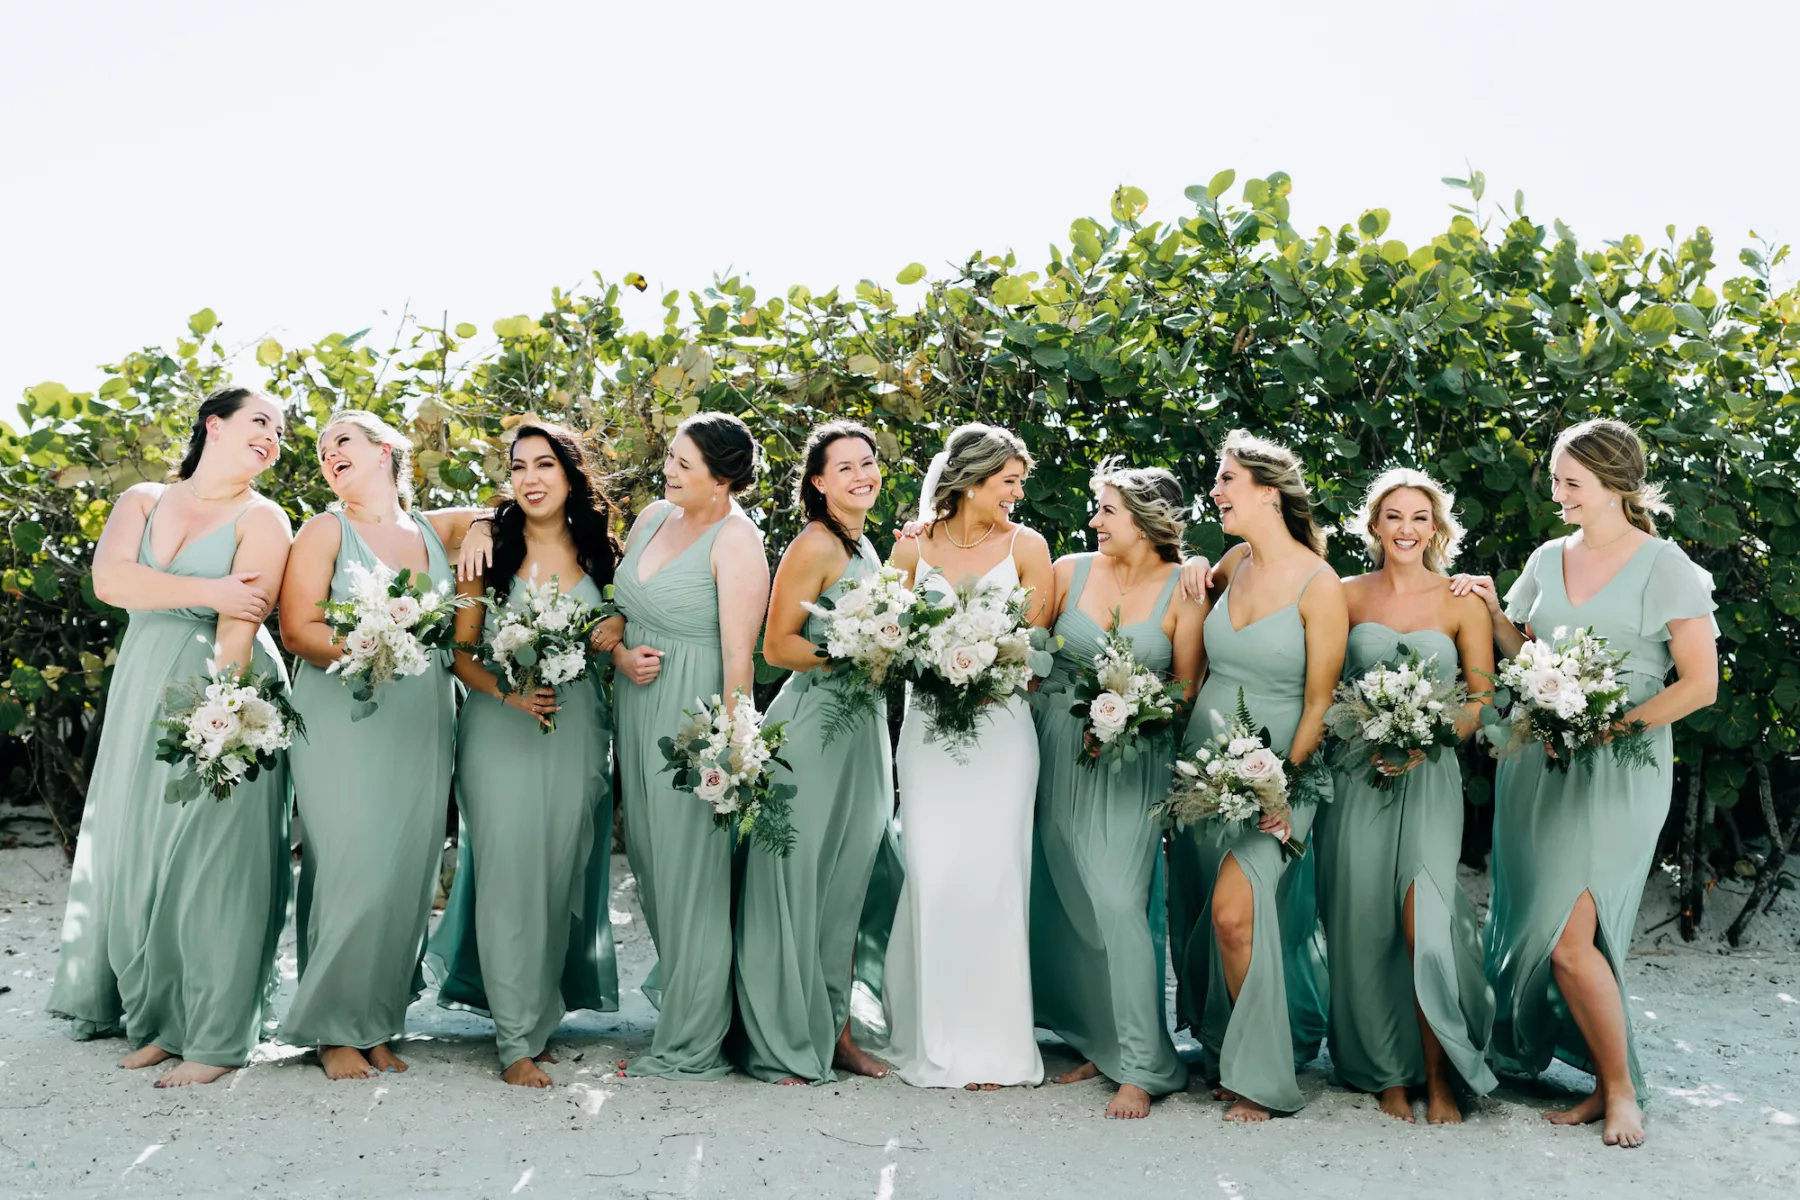 Sage Green Bridesmaid Dresses for Boho Madeira Beach Wedding Ideas | Tampa Bay Hair and Makeup Artist Femme Akoi Beauty Studio